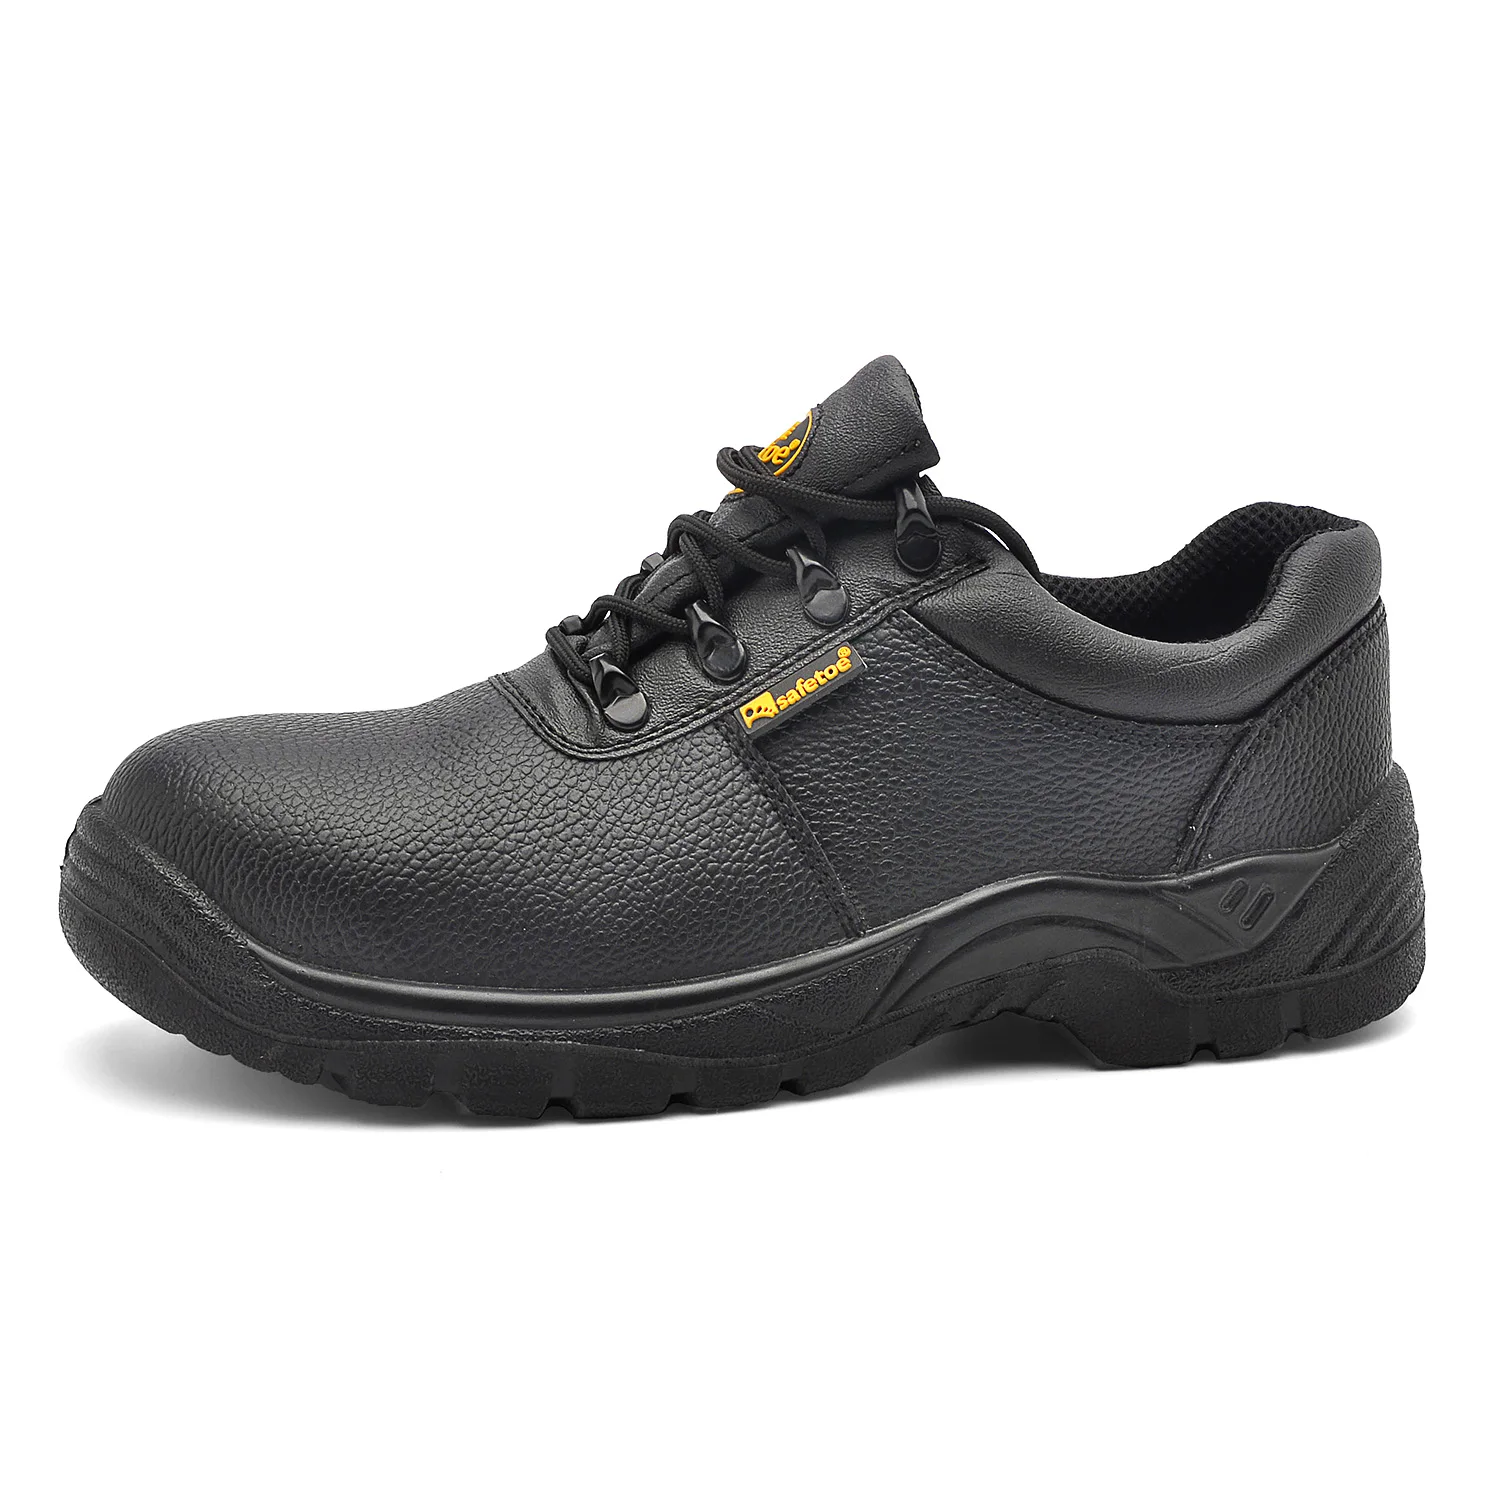 En345 Special Protective Toecap Safety Shoes Men - Buy Protective ...